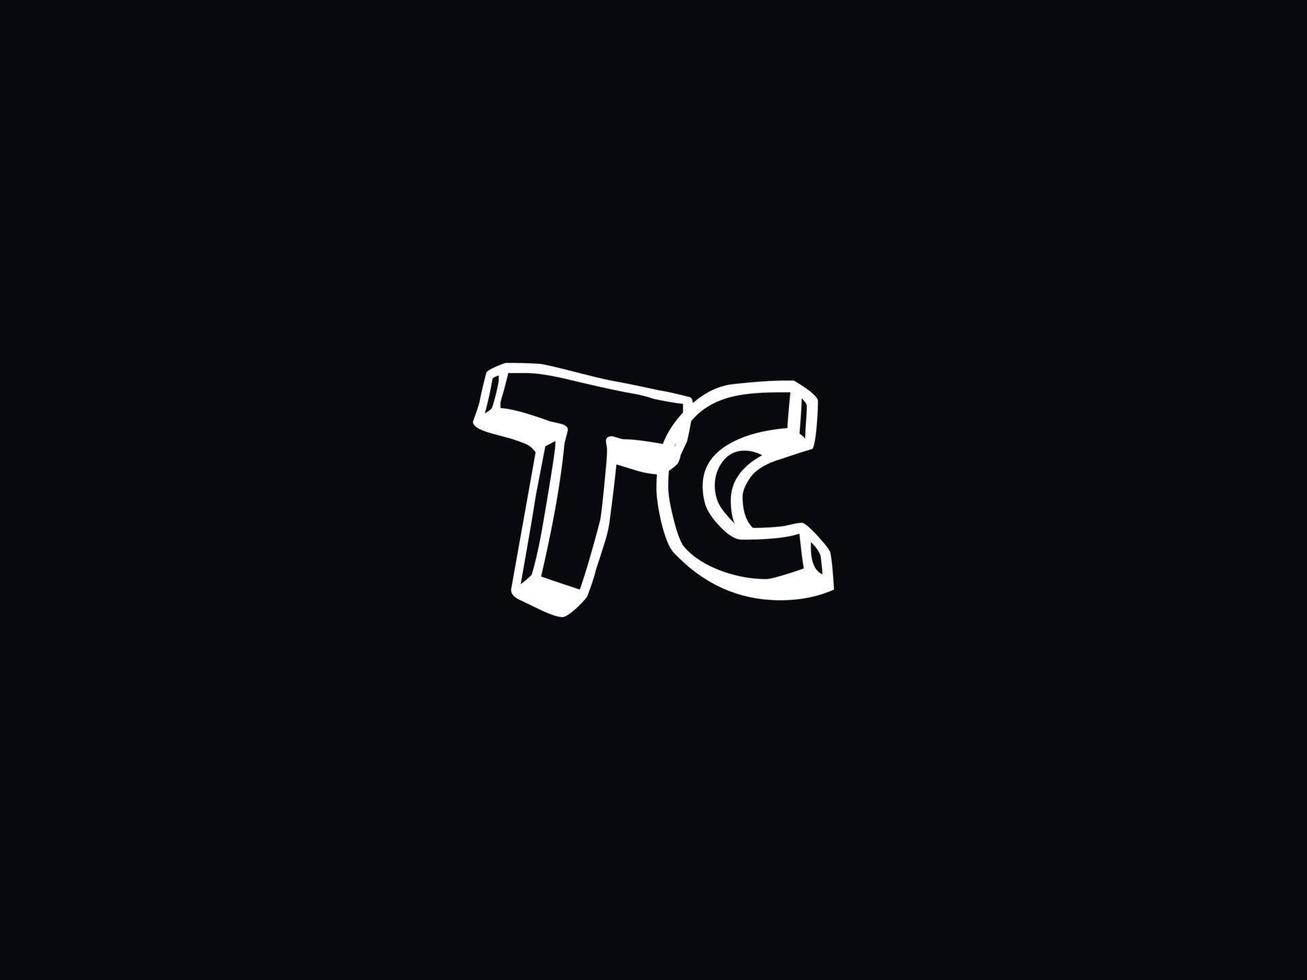 bunt tc Logo Symbol, minimalistisch tc Logo Brief Design vektor